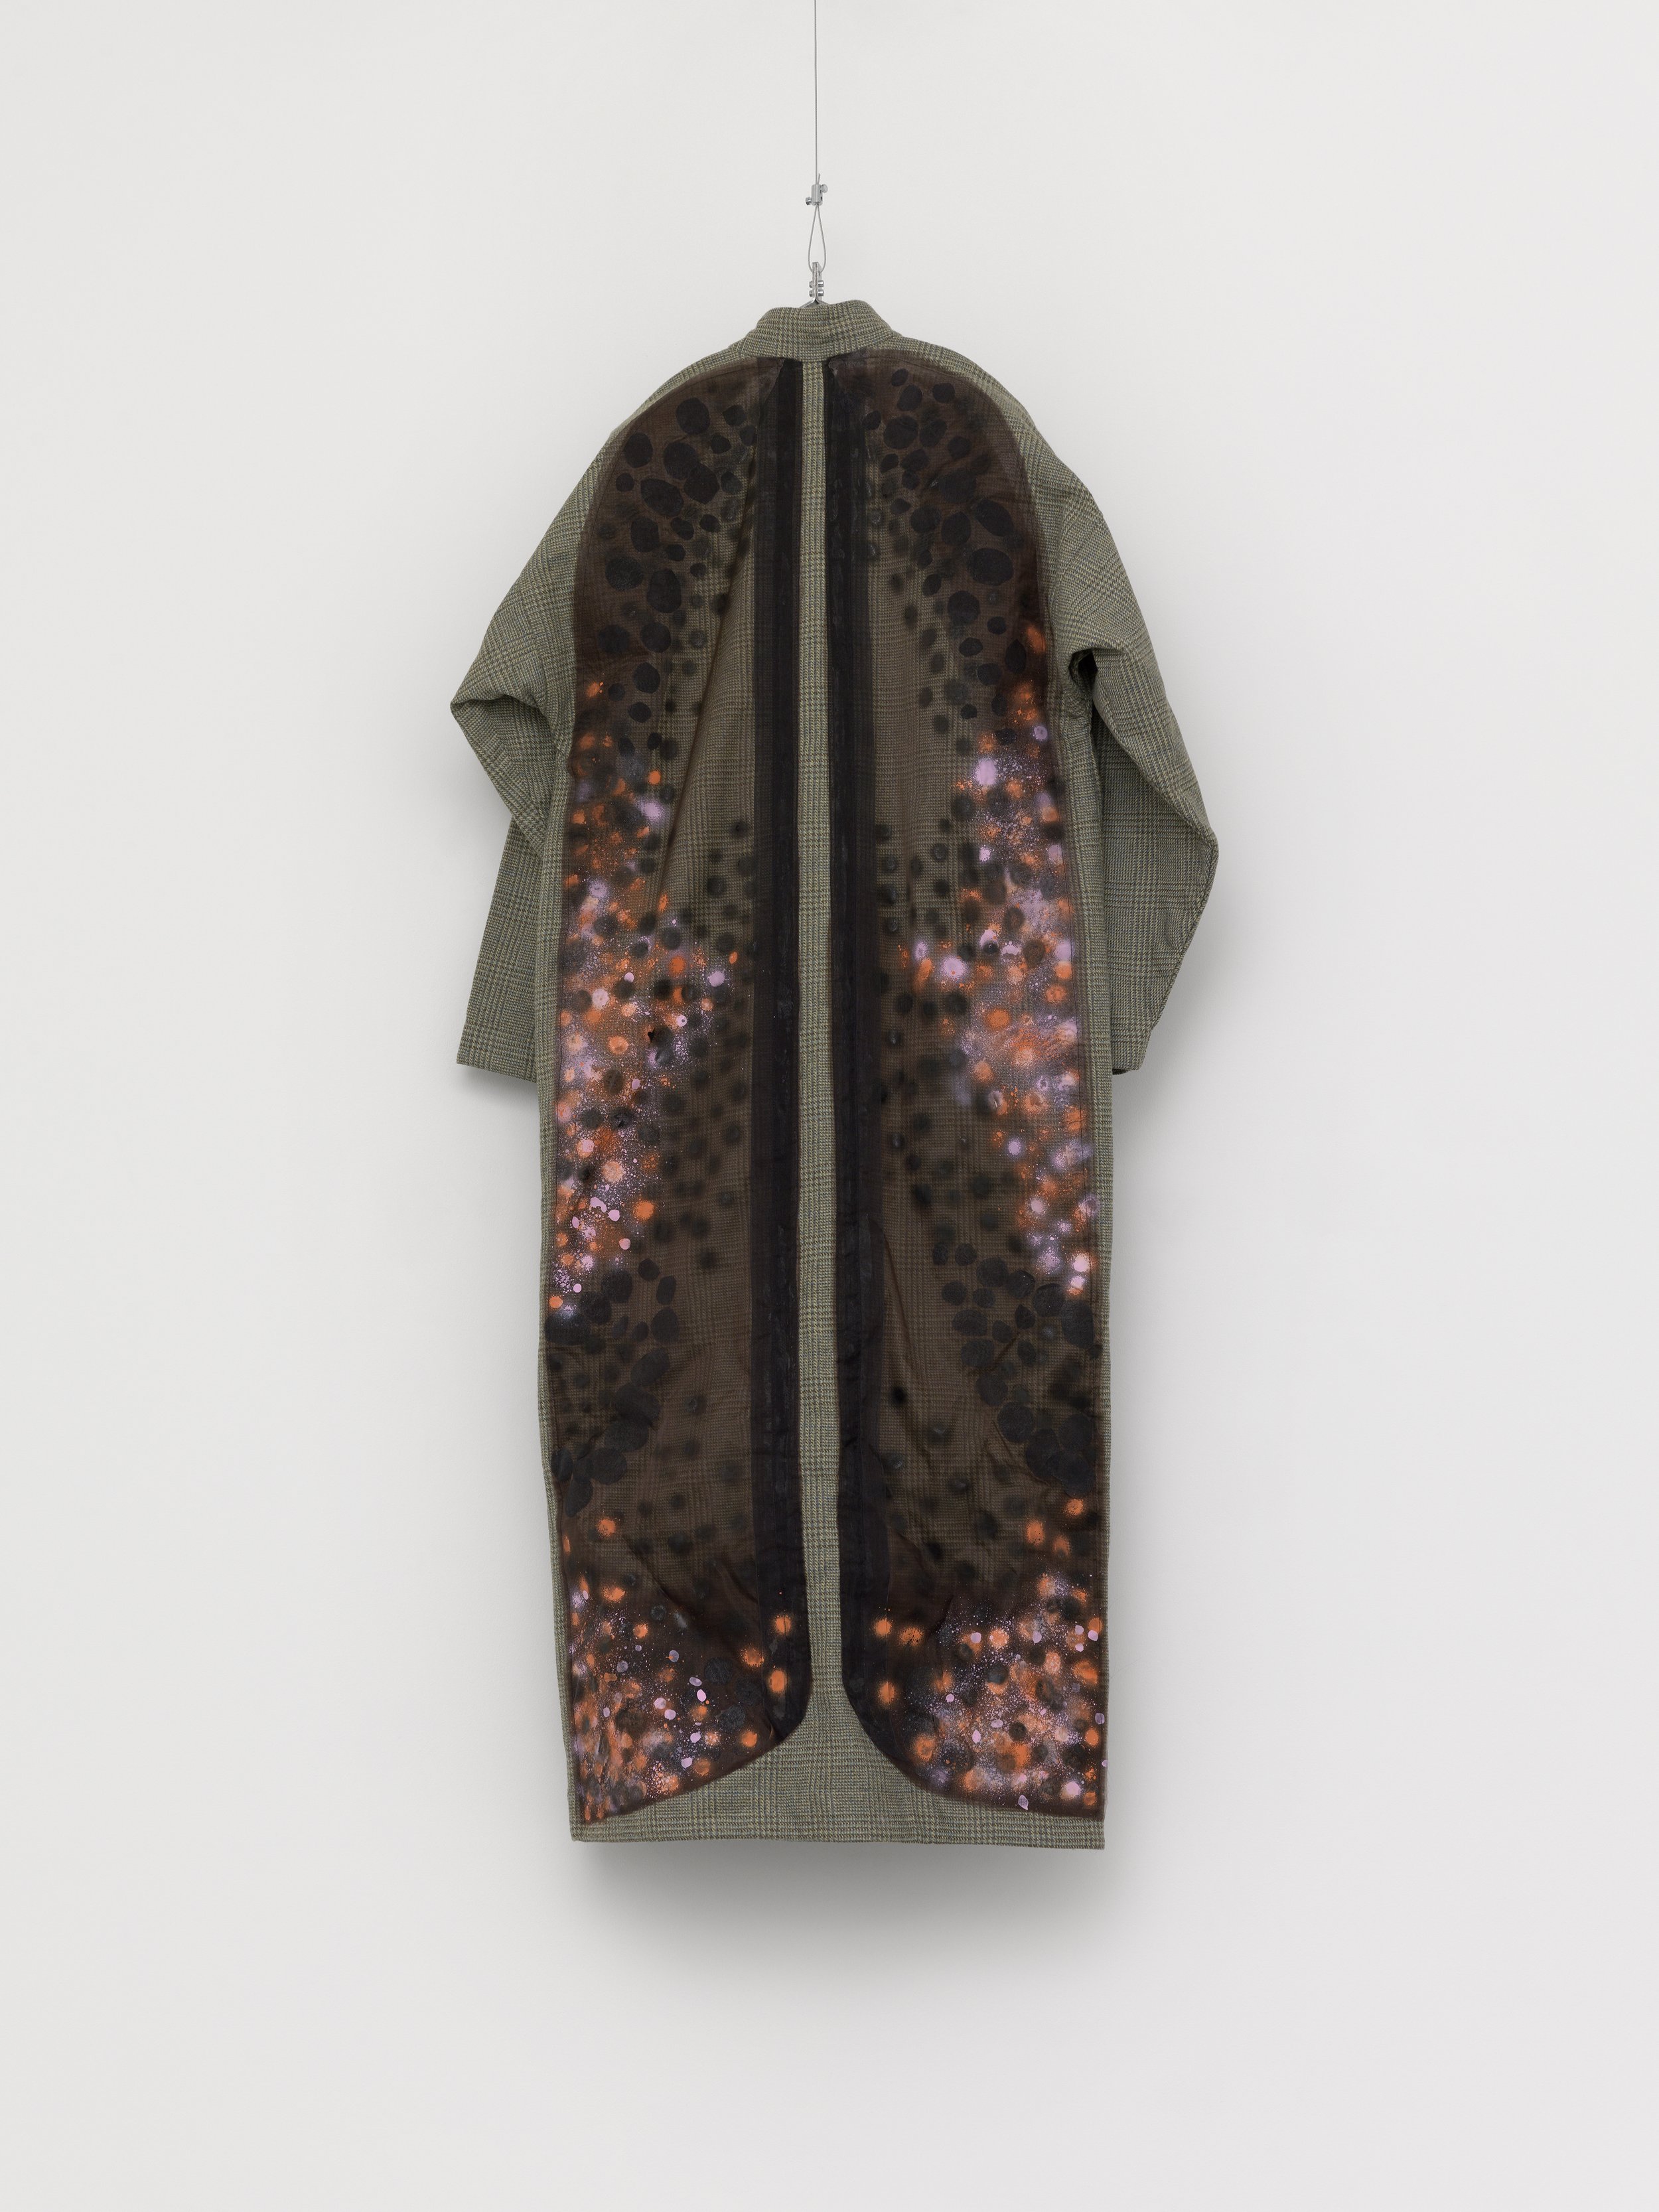   Hummel,  2022, mixed media on fabric, 180 x 150 cm 